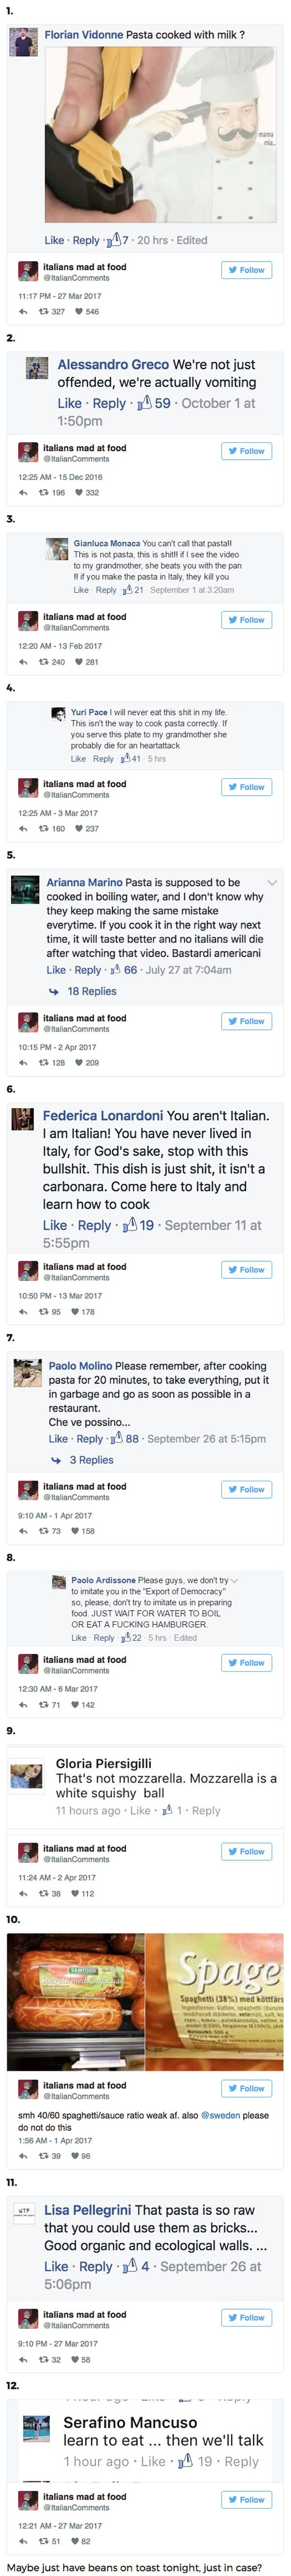 Feel the culinary rage of Italians